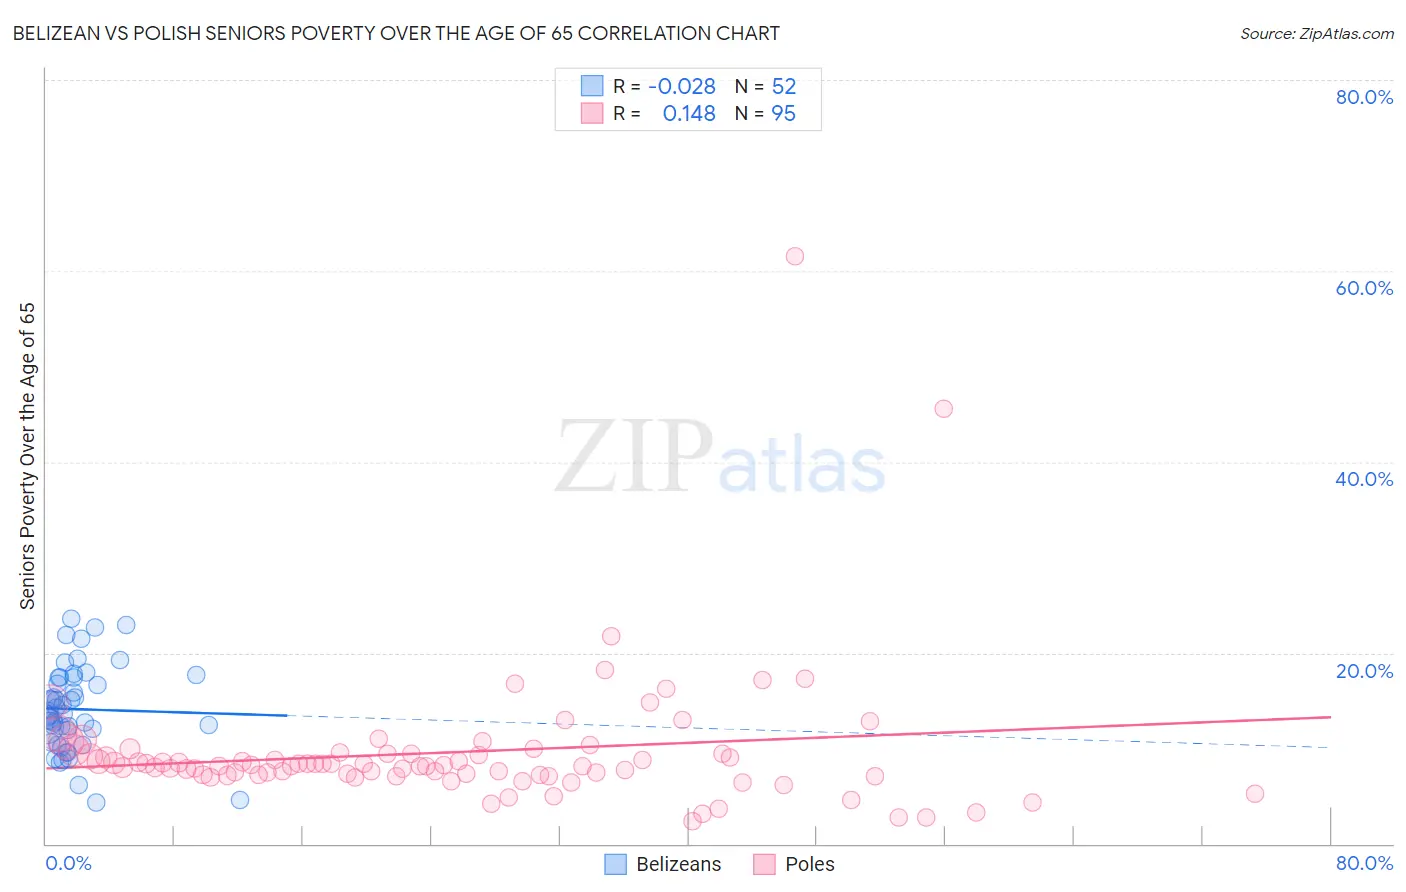 Belizean vs Polish Seniors Poverty Over the Age of 65